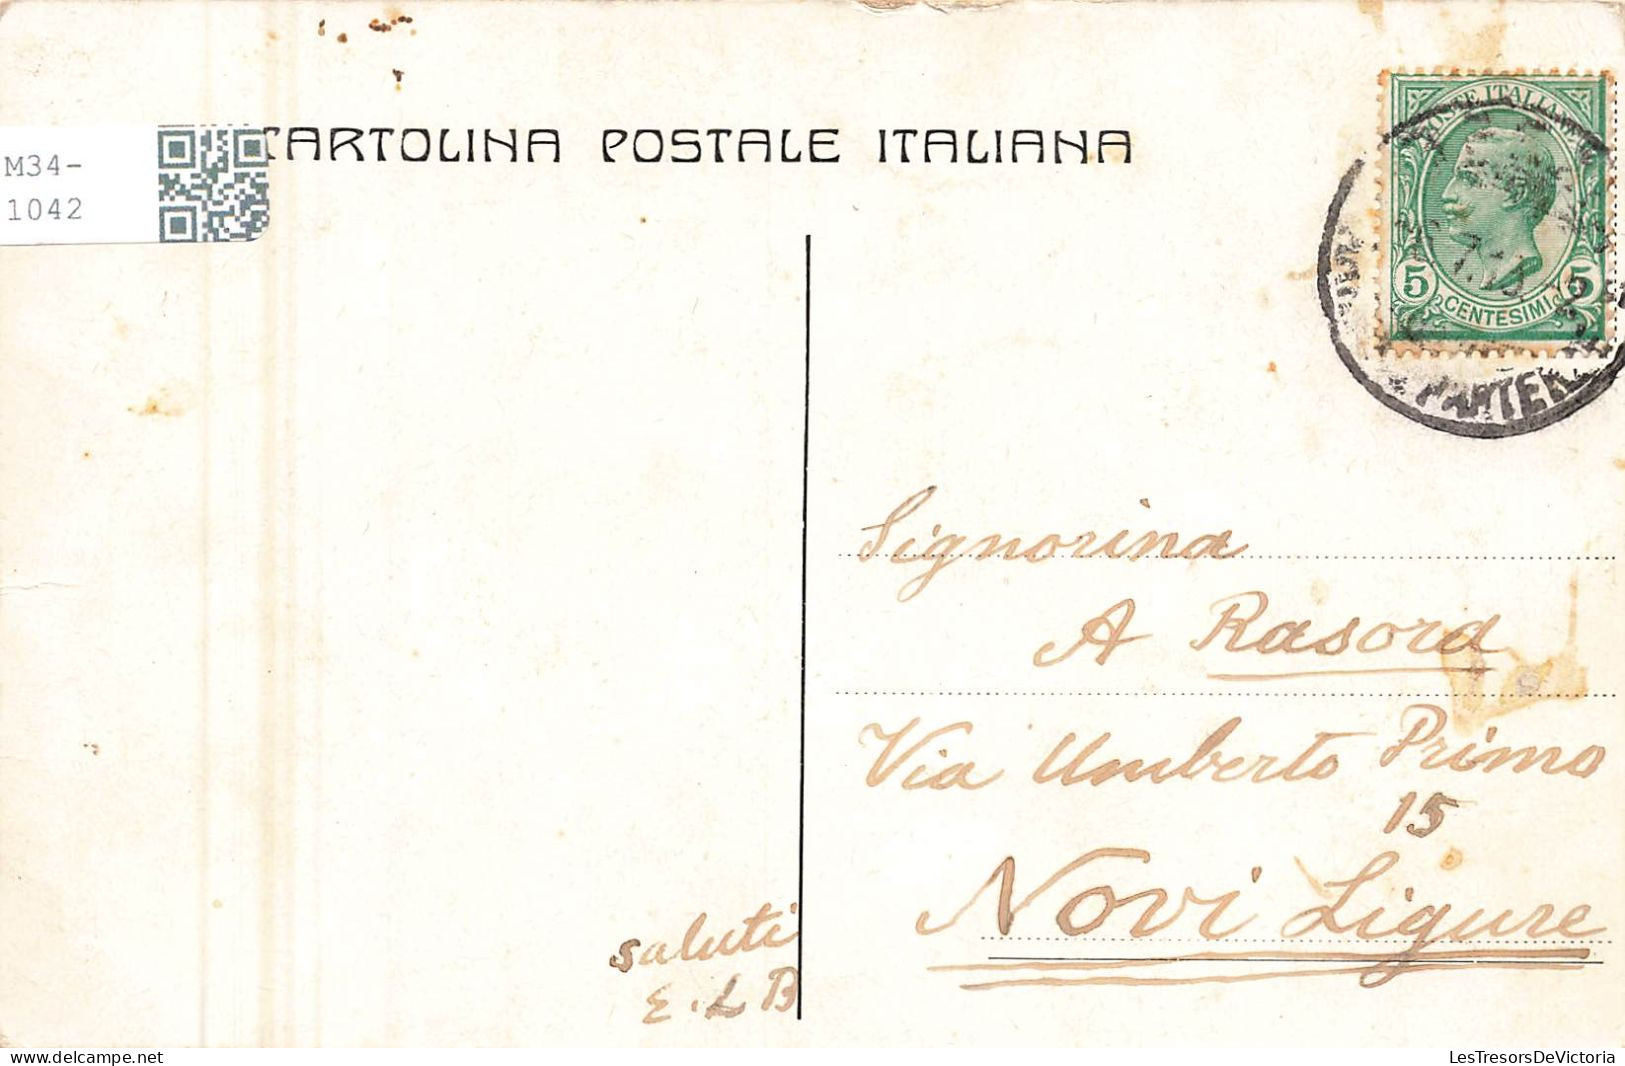 ITALIE - SN Sicilia - Tripoli 5 Ottobre 1911 - Carte Postale Ancienne - Other & Unclassified